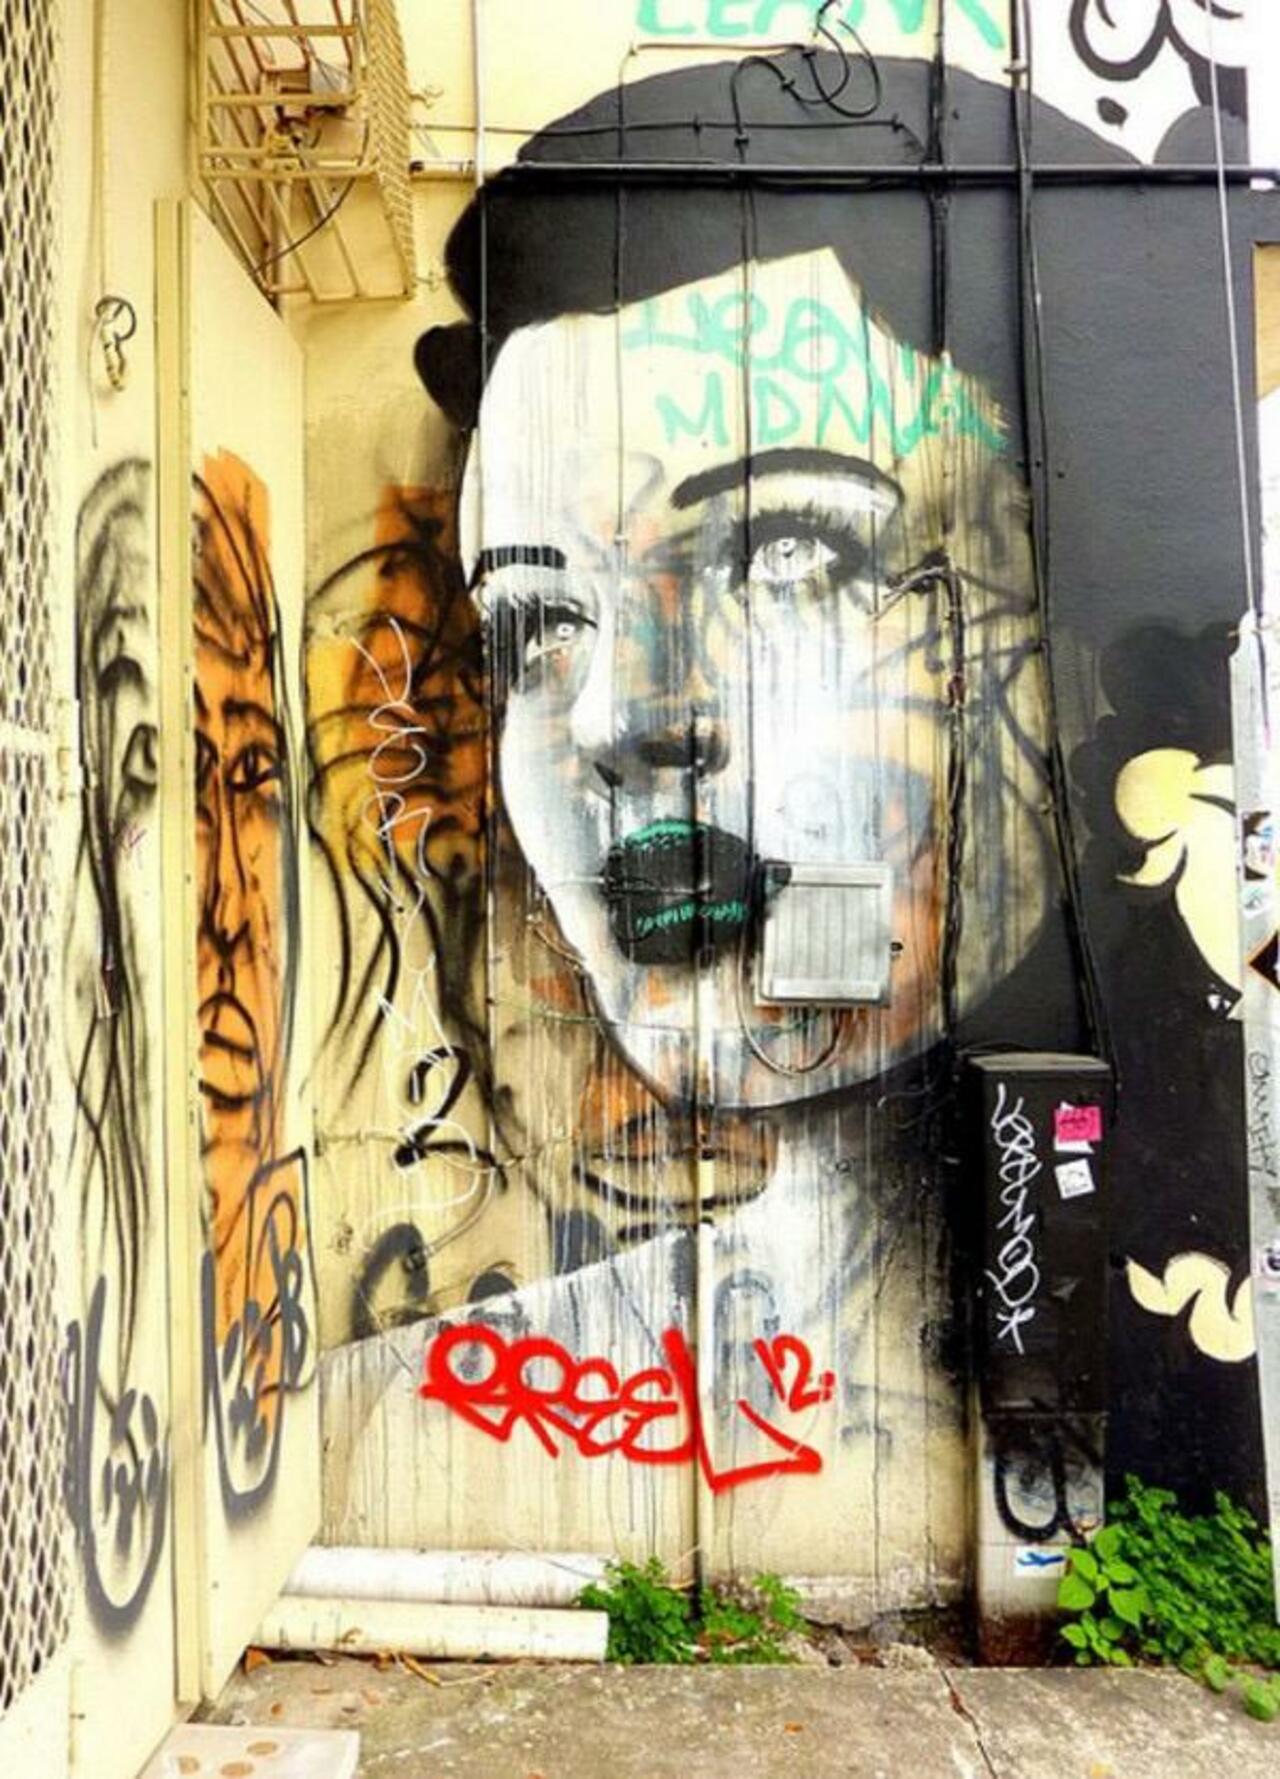 Rone
#streetart #art #graffiti #mural http://t.co/KJqBiTX366